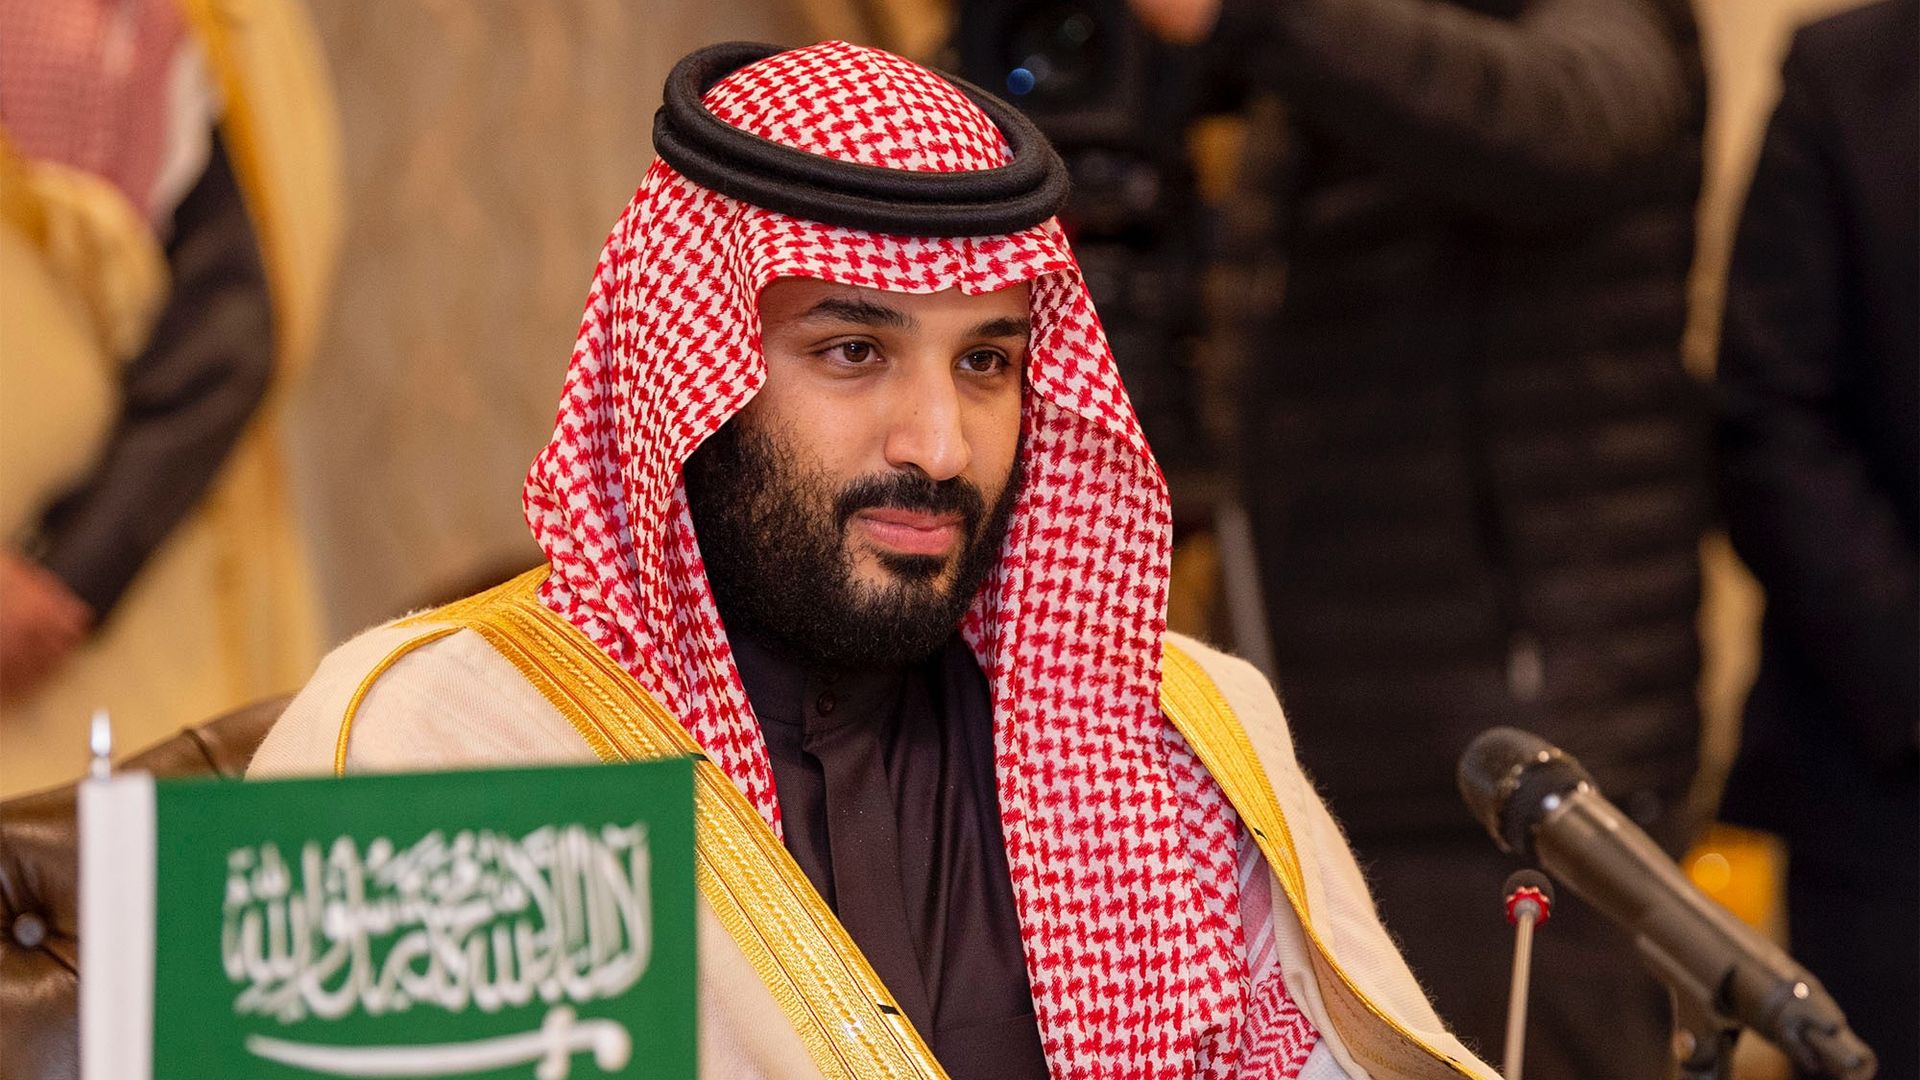 In this image, Crown Prince of Saudi Arabia Mohammad bin Salman sits behind a small green and white Saudi Arabian flag.